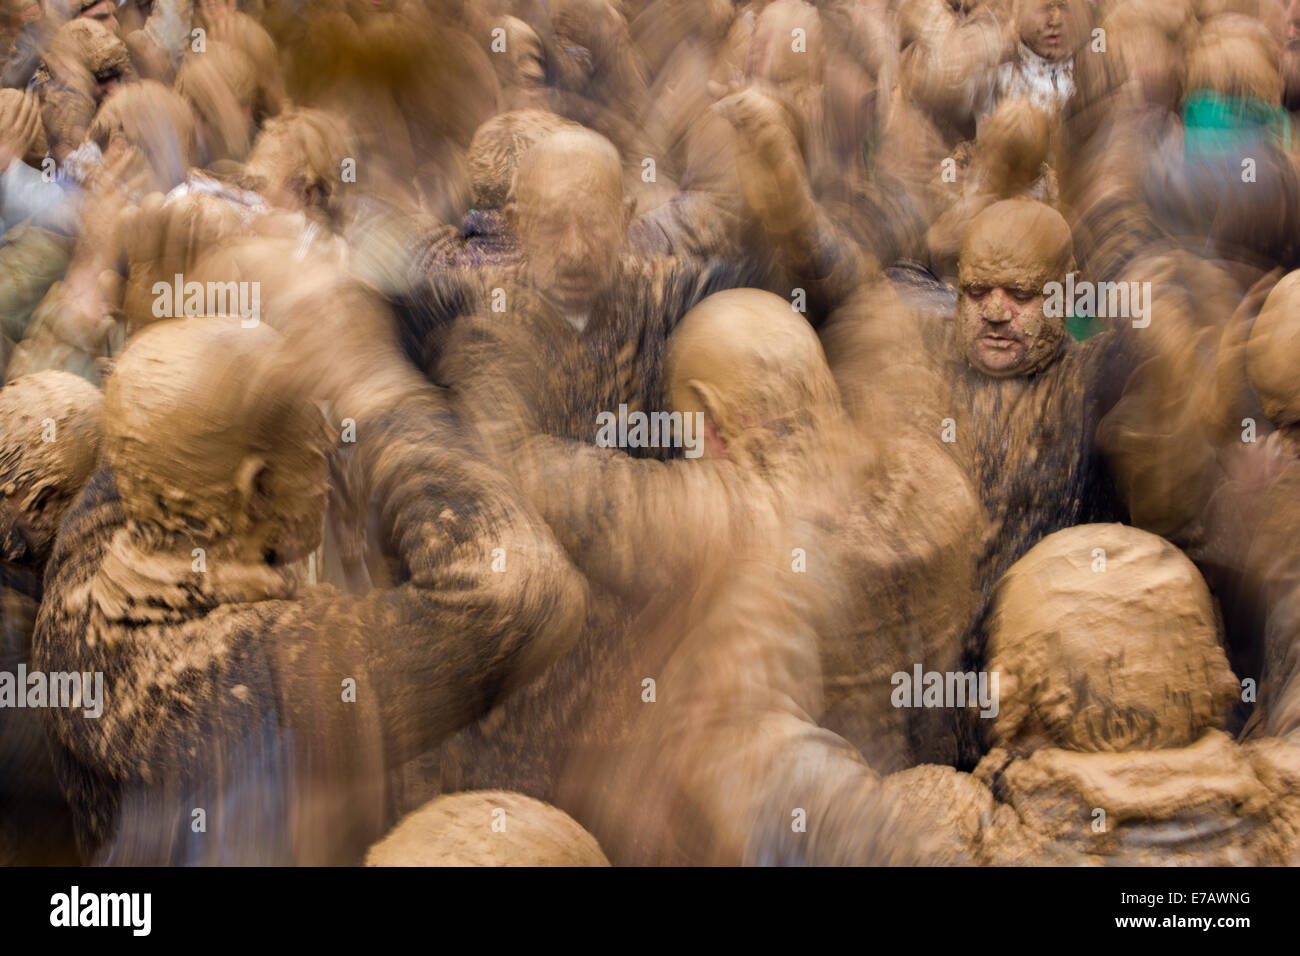 Shiite Muslim men, covered in mud, in trance, chanting and self-flagellating during Ashura Day, in Bijar, Iran. Stock Photo